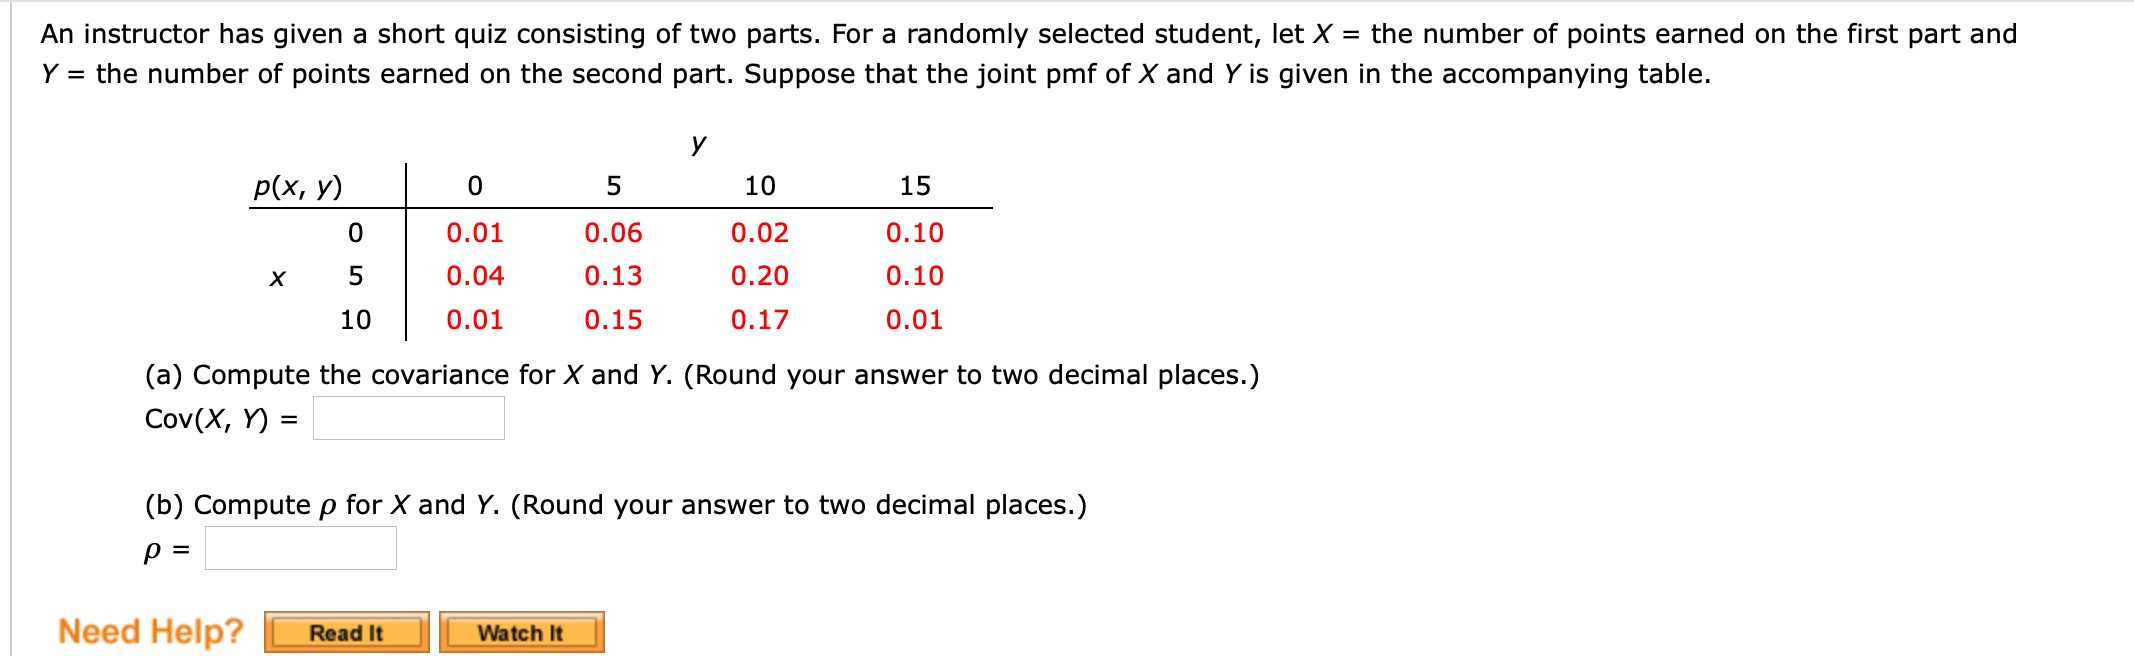 CM1011 - Quiz Answers 12 - 21.docx - Quiz 12 10/23 1 2 3 4 5 6 7 8